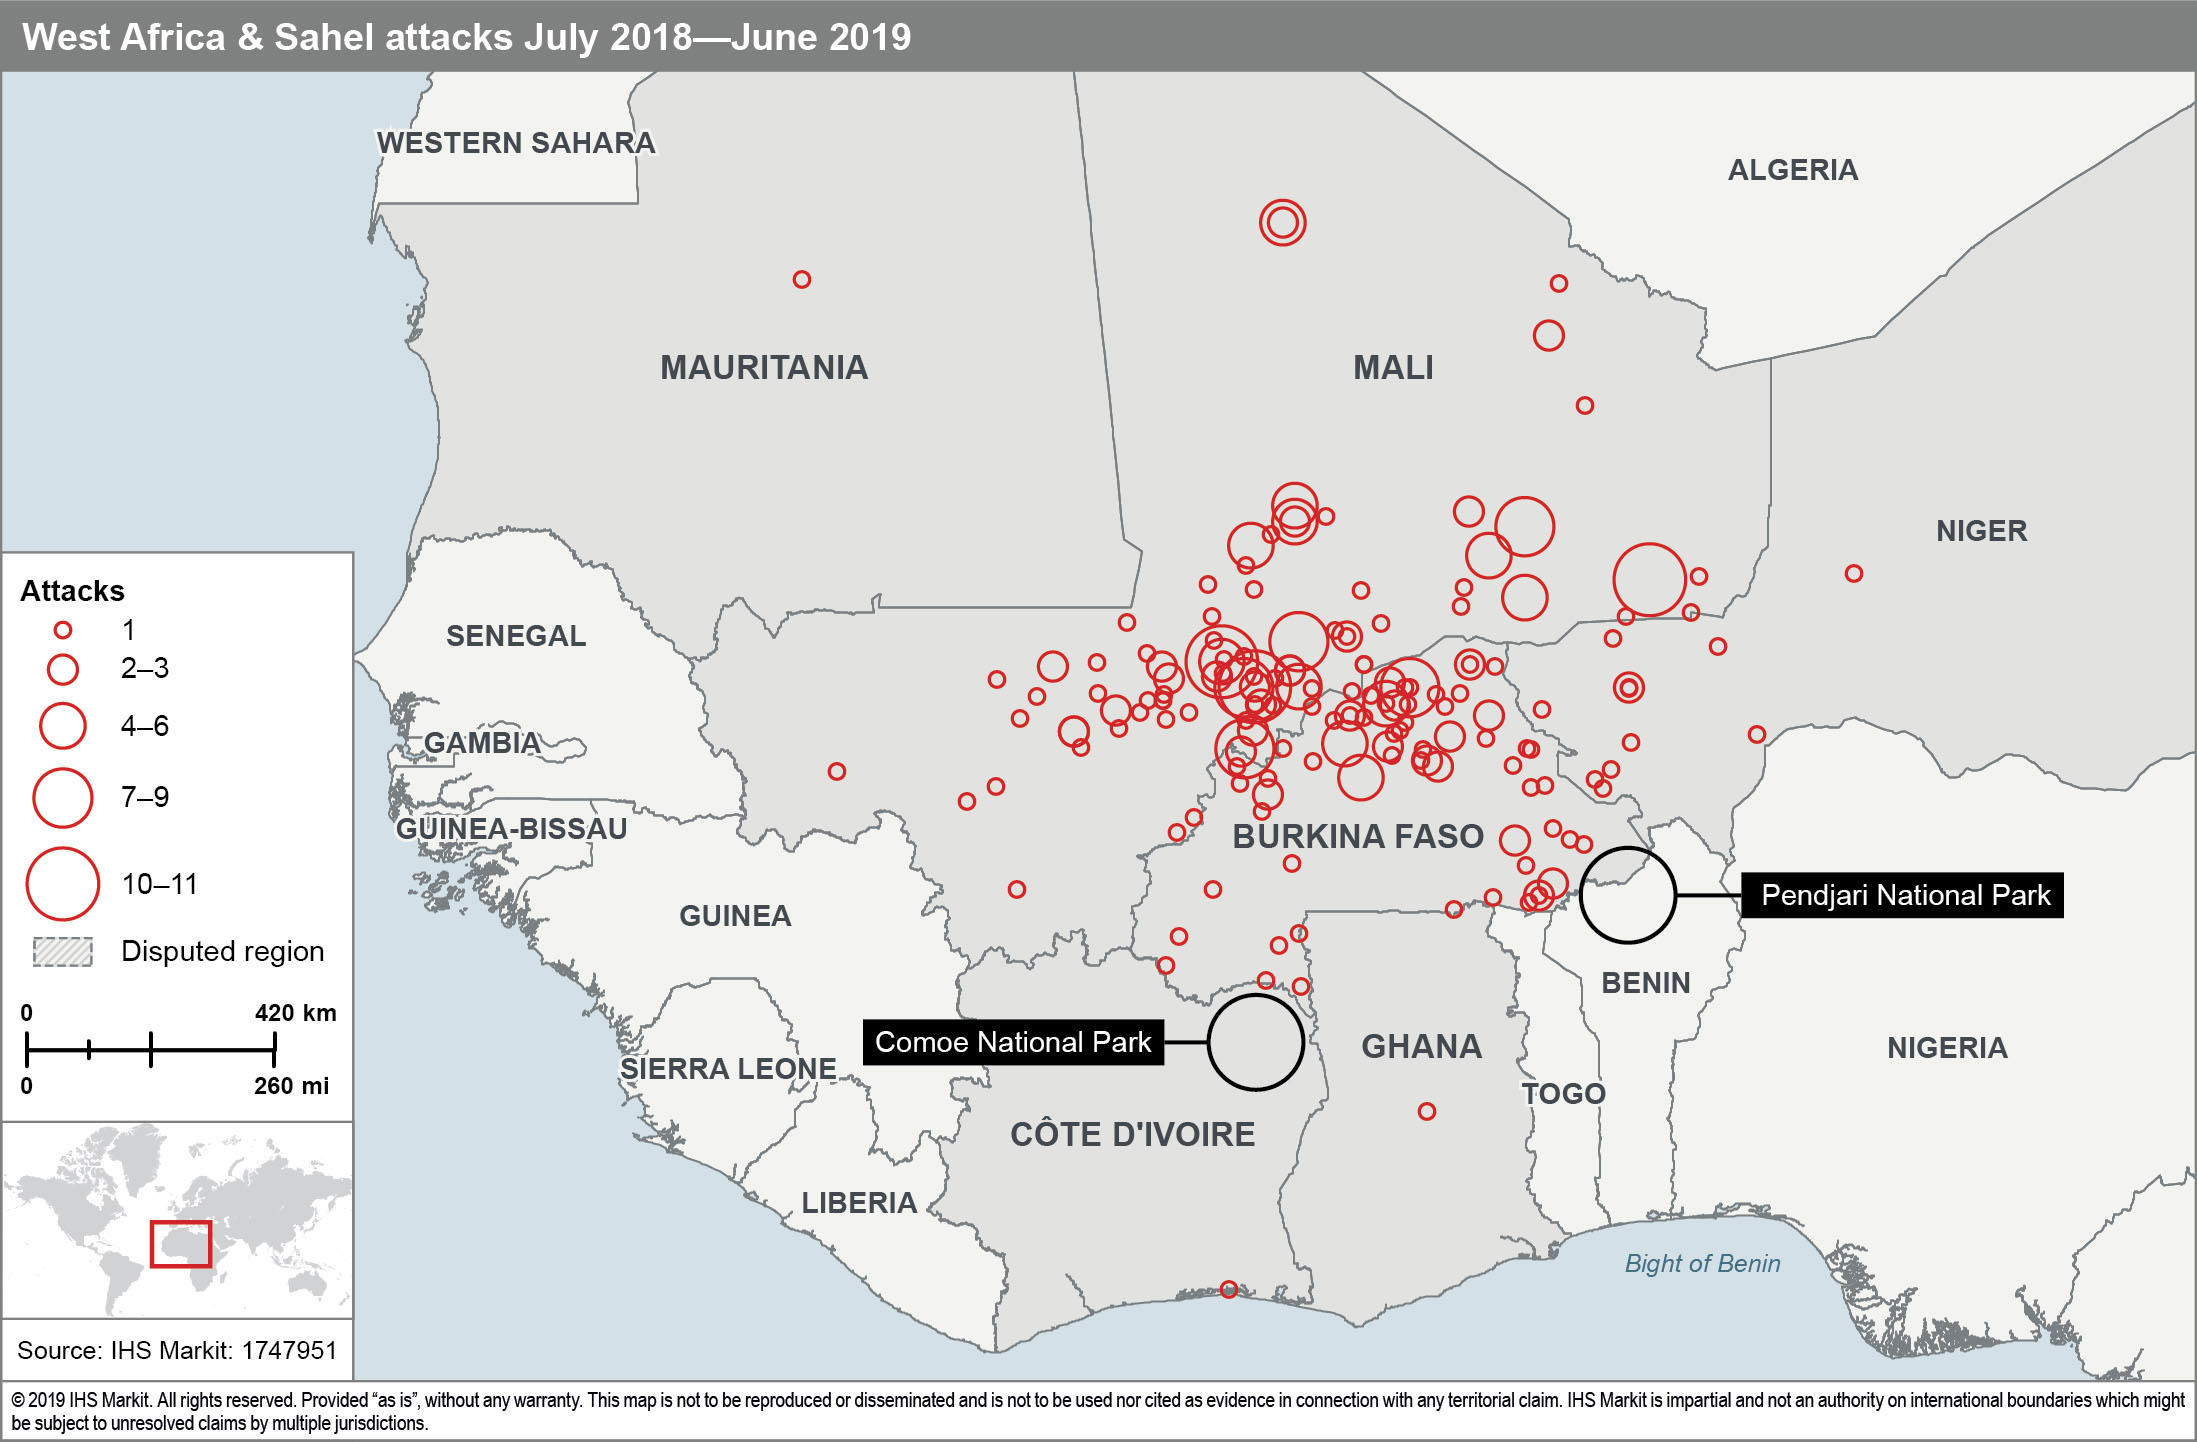 West Africa & Sahel attacks July 2018-June 2019 (IHS Markit)